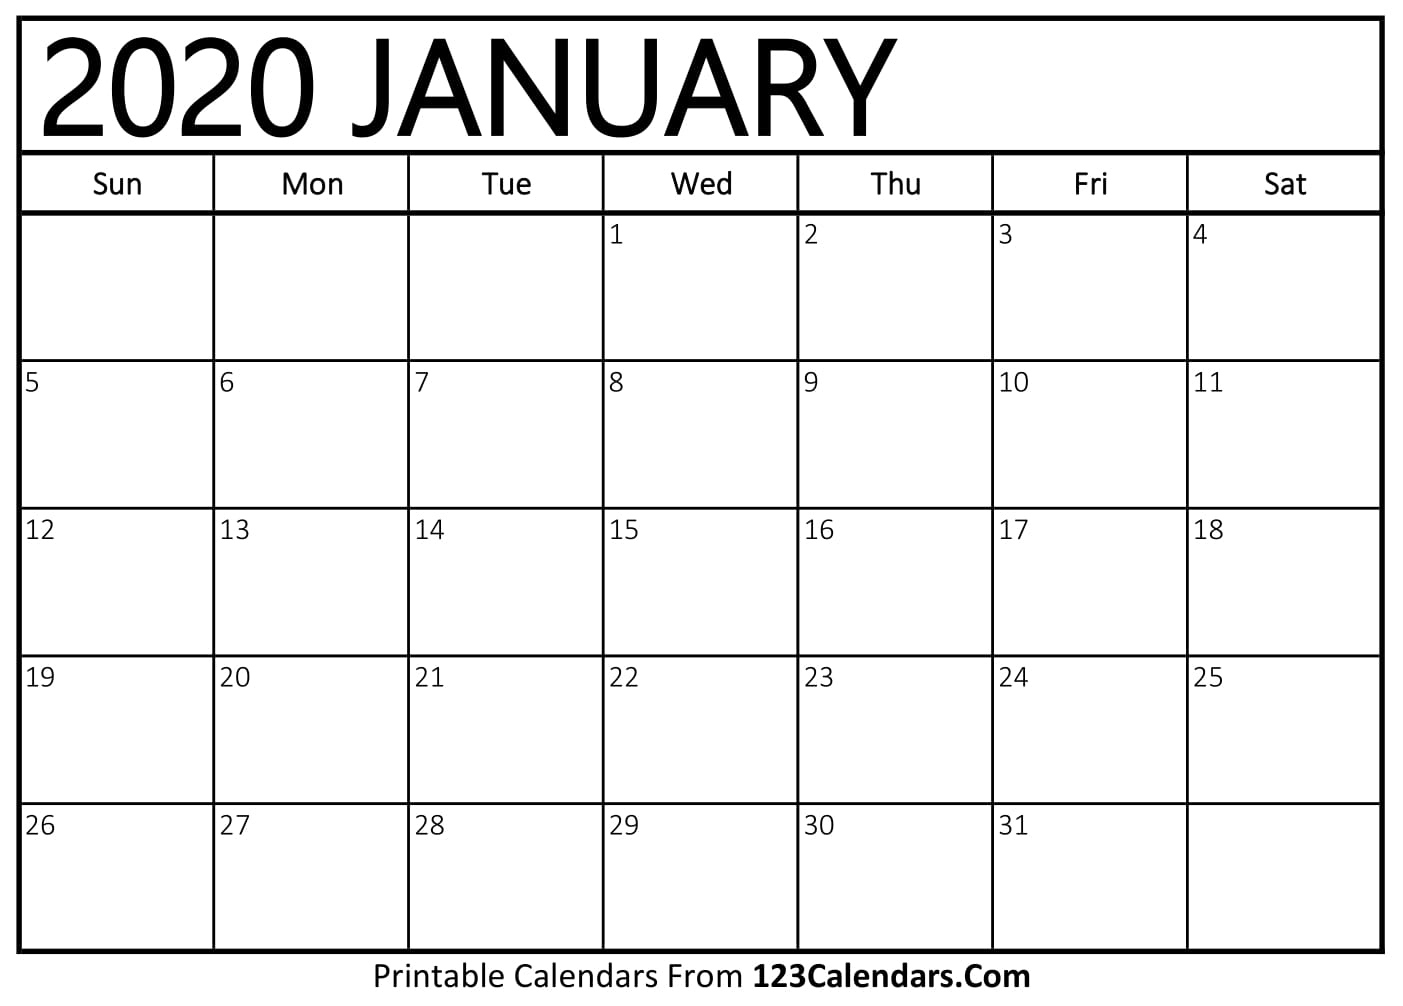 Free Printable Calendar | 123Calendars Dashing Printable Blank Calendar With Dates Only